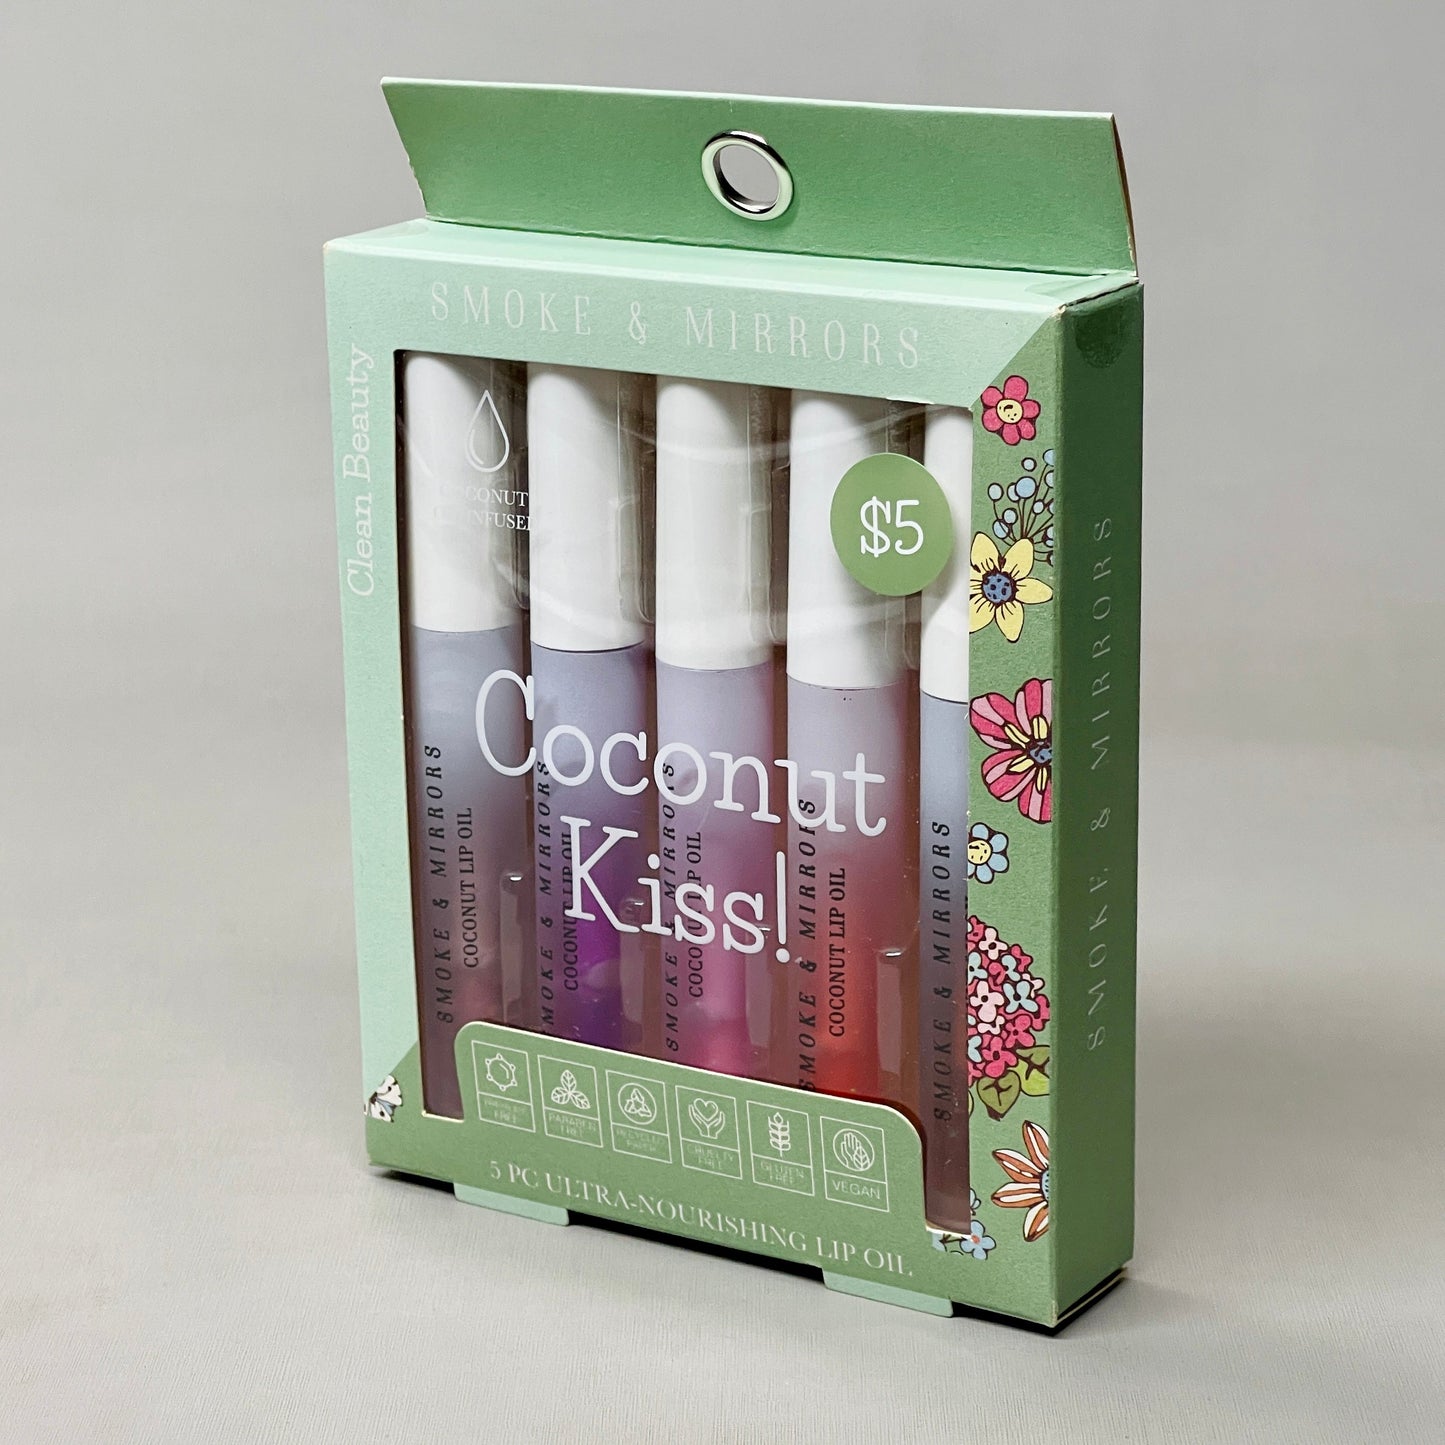 z@ SMOKE & MIRRORS 3 Pack Of Coconut Kiss 5 PC Ultra-Nourishing Lip Oil 02/24 (New) D